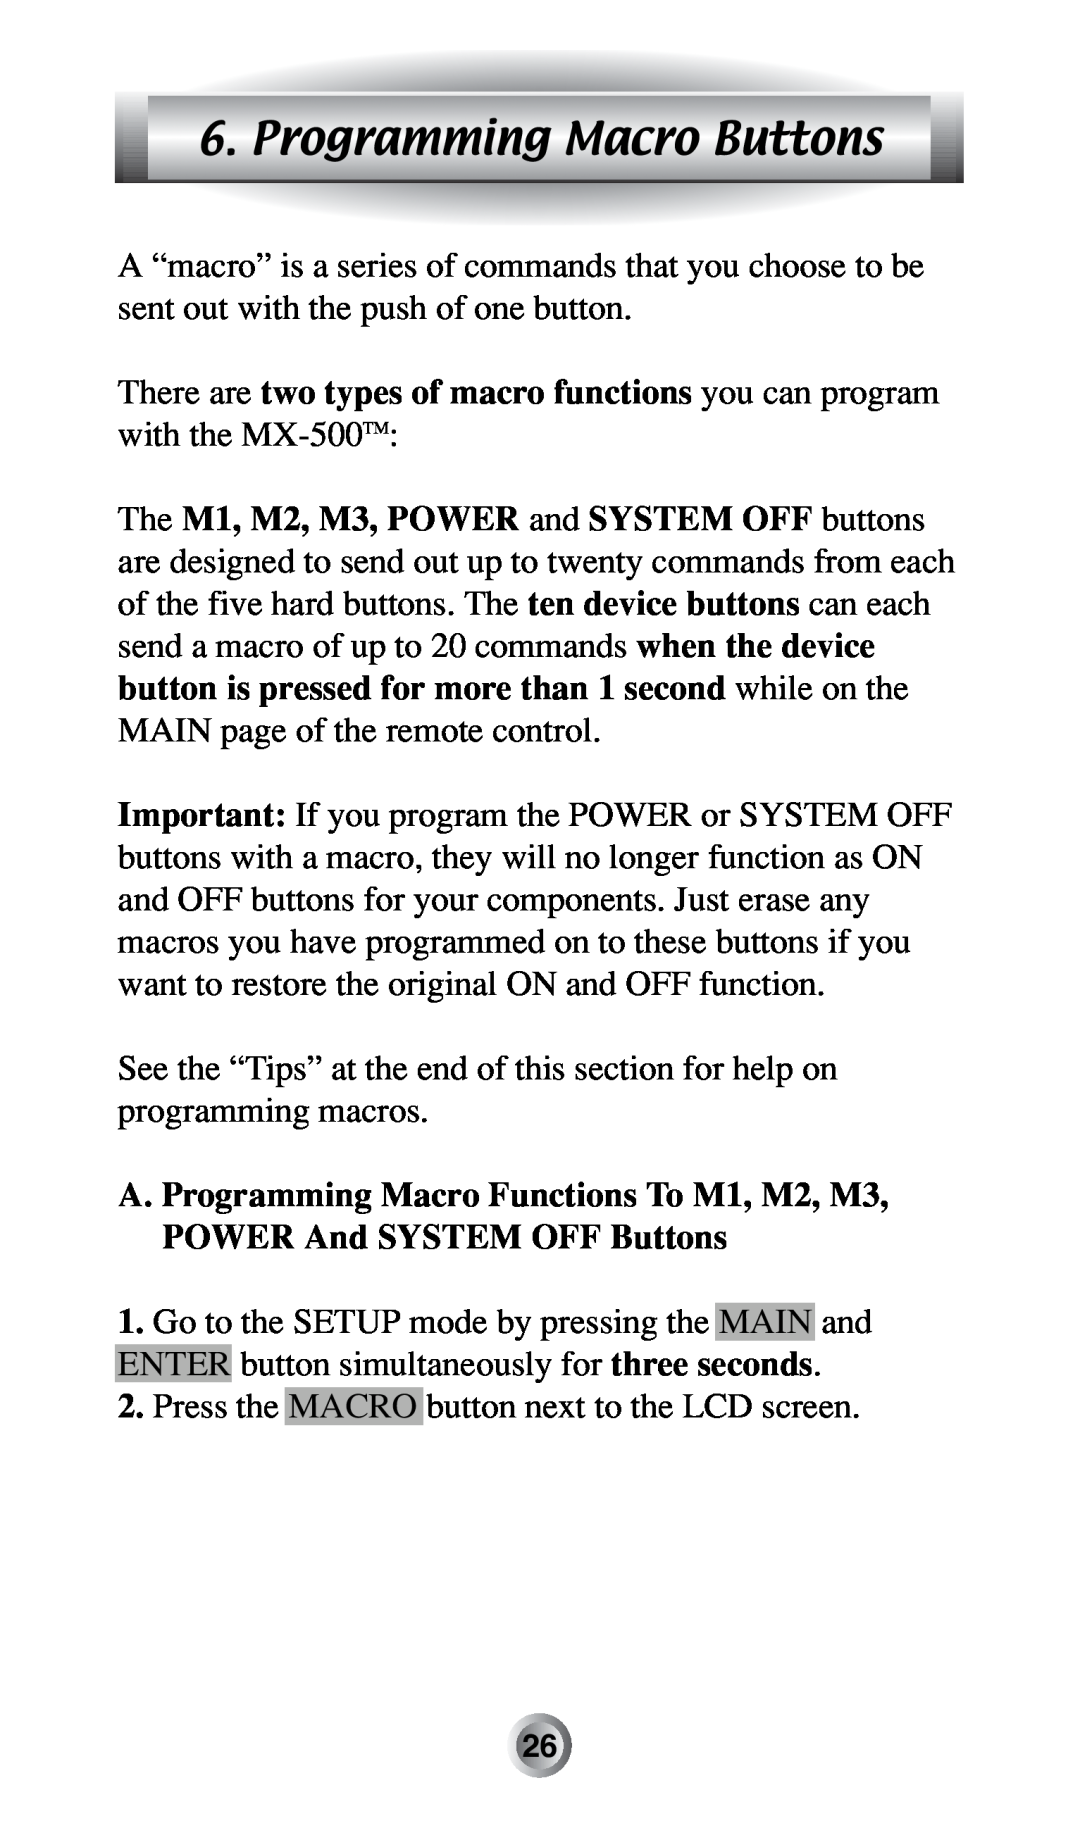 Radio Shack MX-500TM manual Programming Macro Buttons 